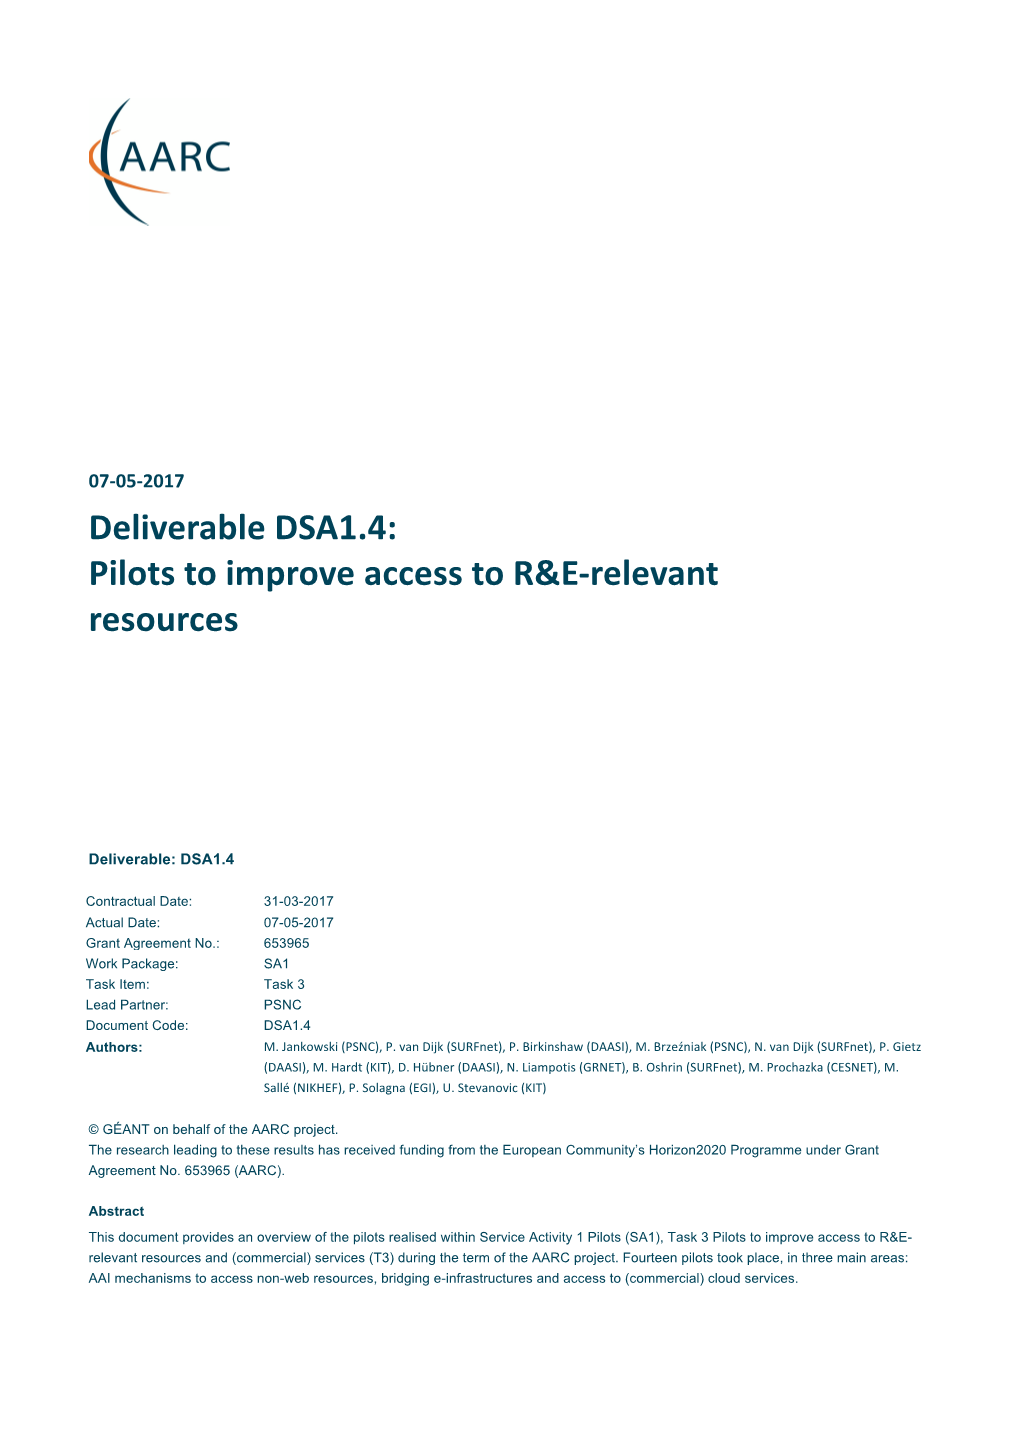 DSA1.3 Pilot to Improve Access to R&E Relevant Resources